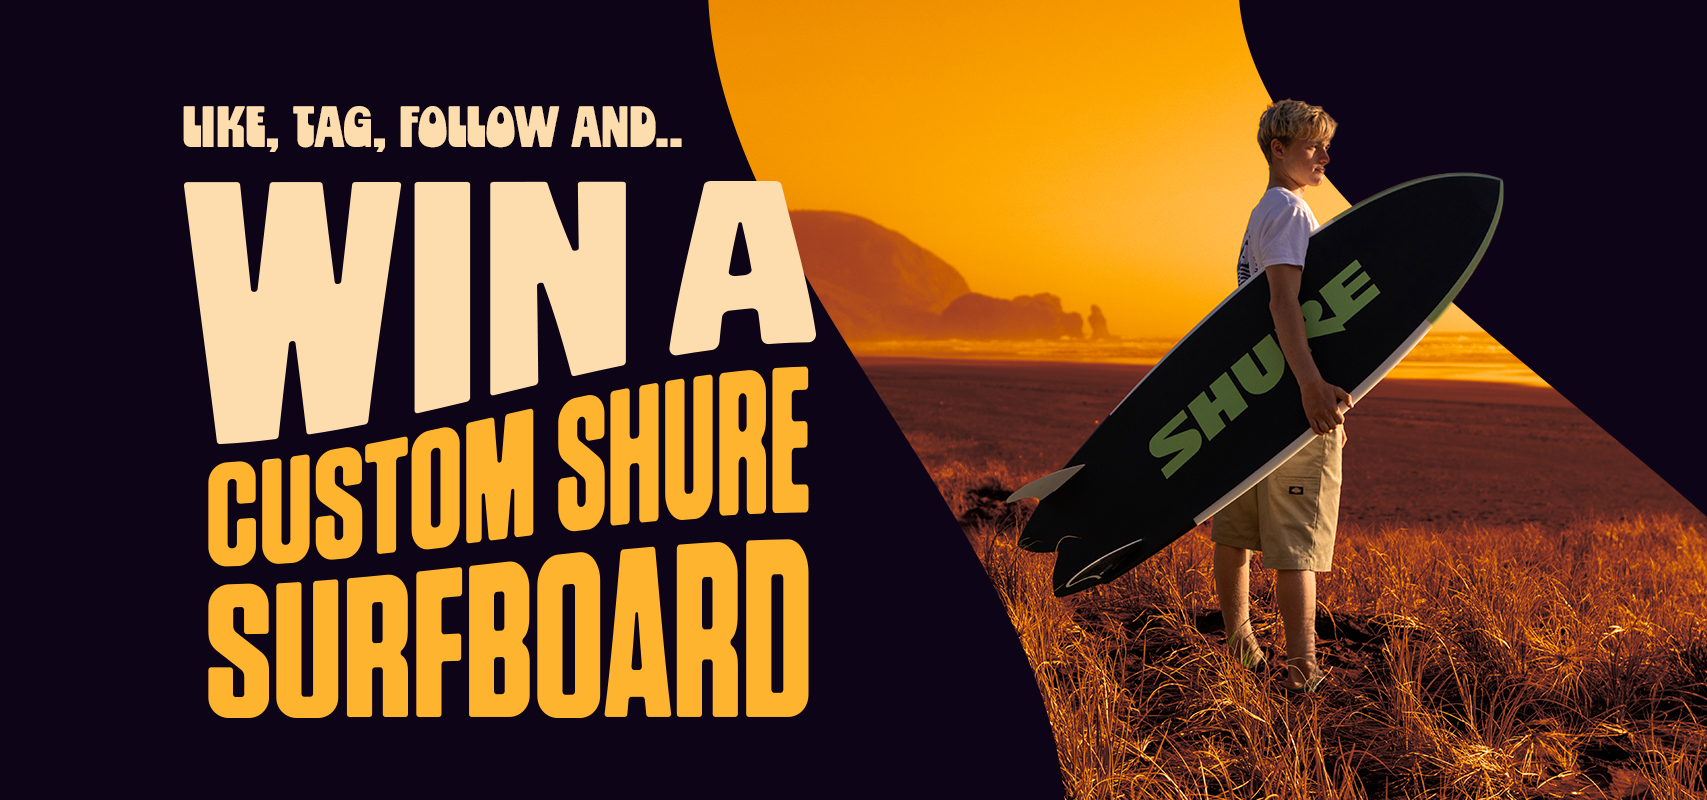 Shure Surfboard Giveaway